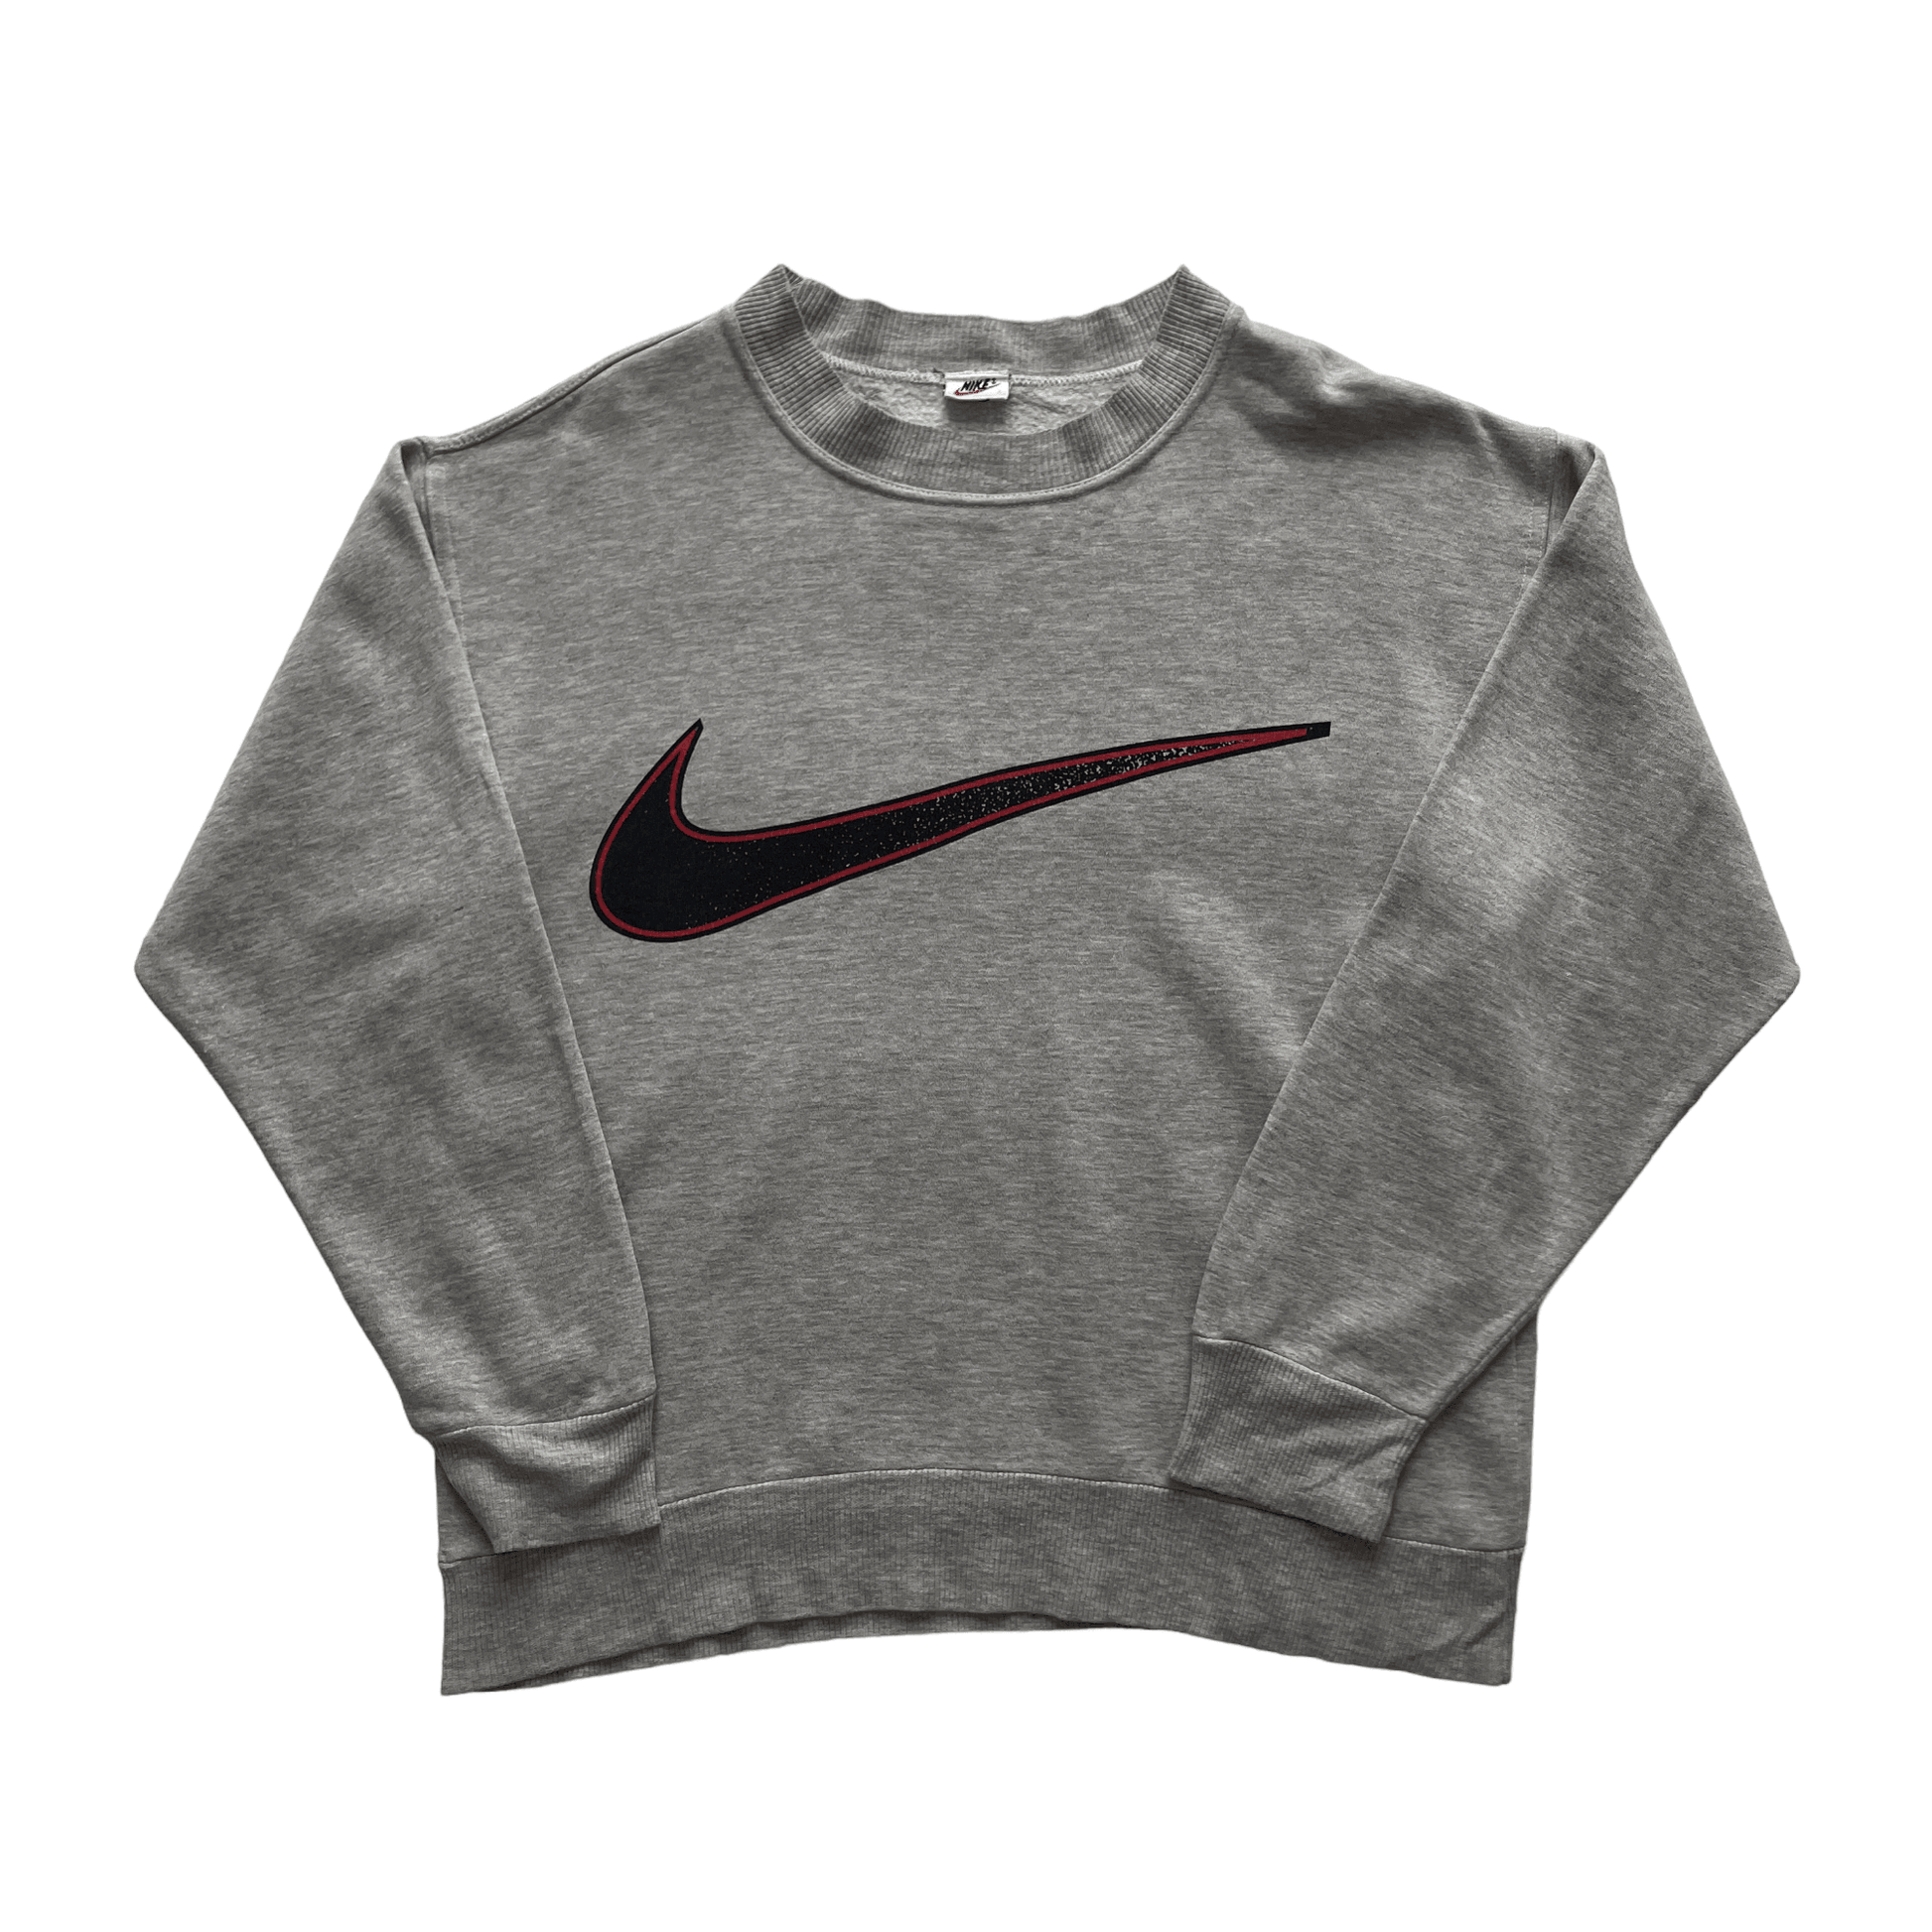 Vintage 90s Grey Nike Large Logo Sweatshirt - Medium - The Streetwear Studio